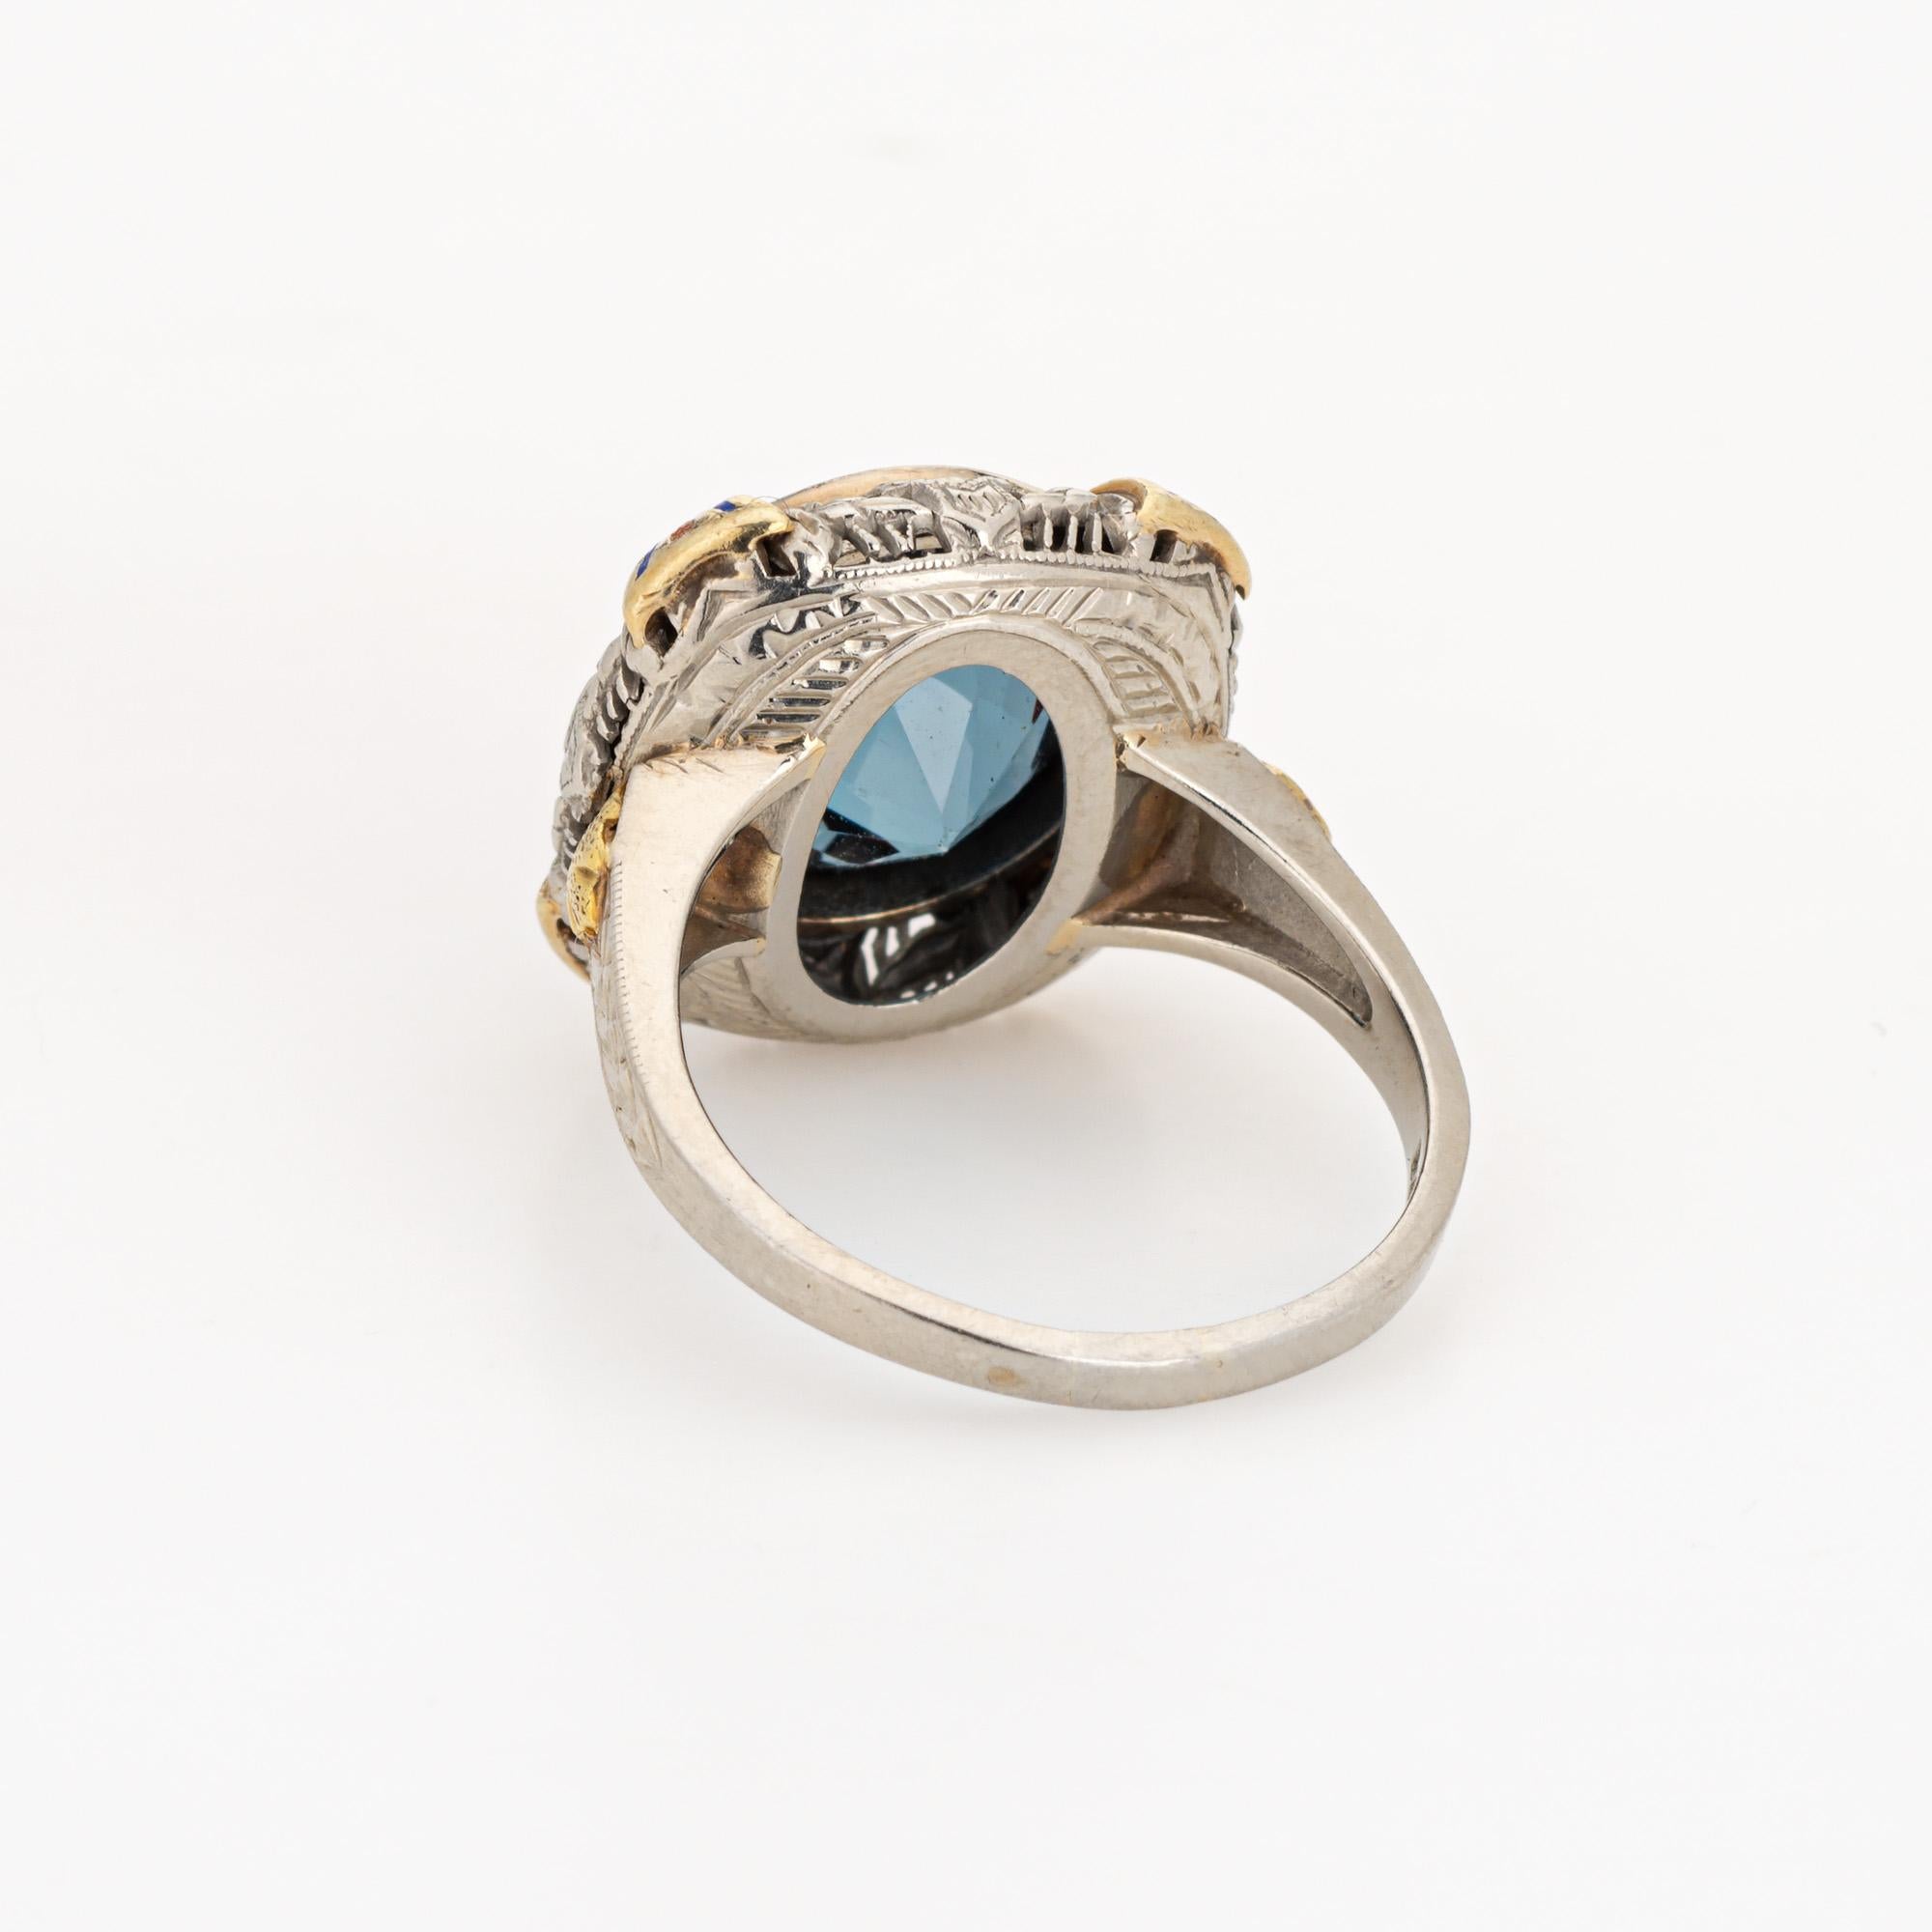 Vintage Art Deco Enamel Cocktail Ring 14k Gold Filigree Jewelry Blue Stone  For Sale 1